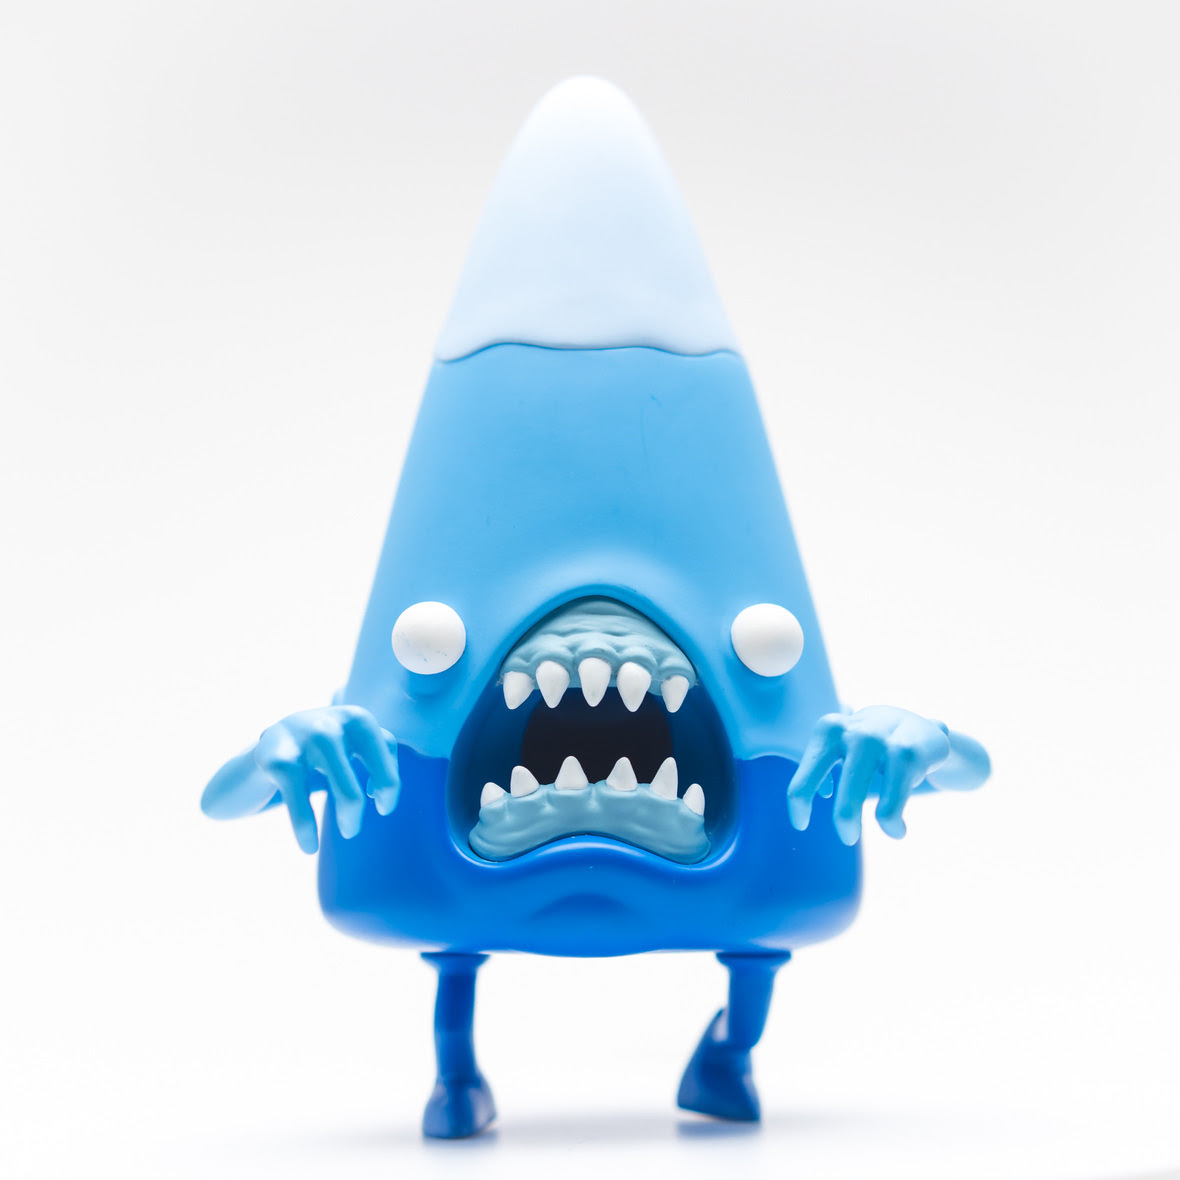 Tenacious Toys Exclusive Candy Cornelius Giant Shark Ed. vinyl art toy by Alex Pardee x 3DRetro